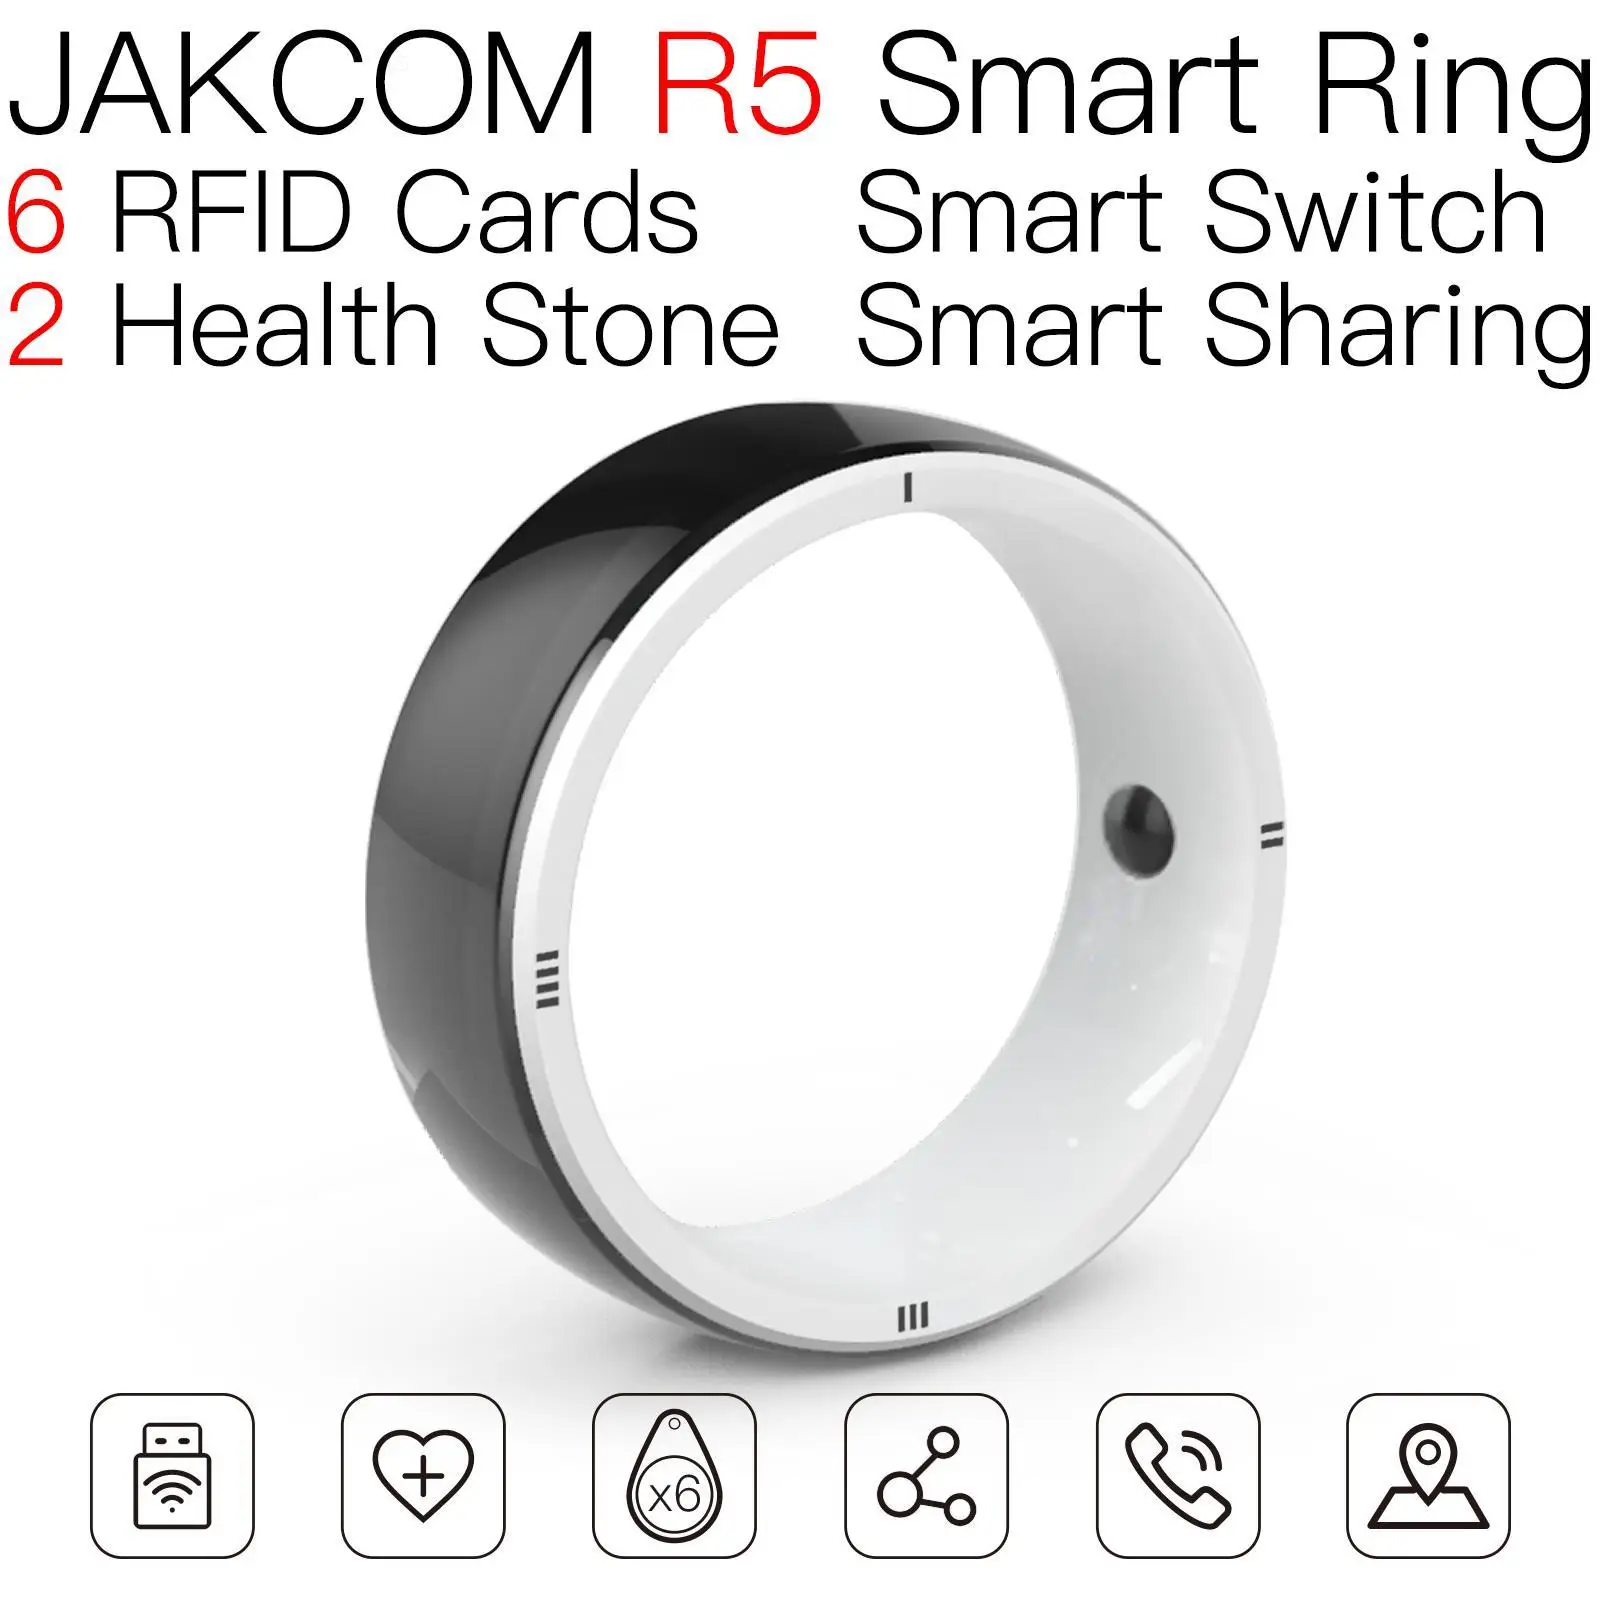 

JAKCOM R5 Smart Ring Nice than cat coller nfc rfid 125khz long range square blood drop type sticker uid changeable chip encoder